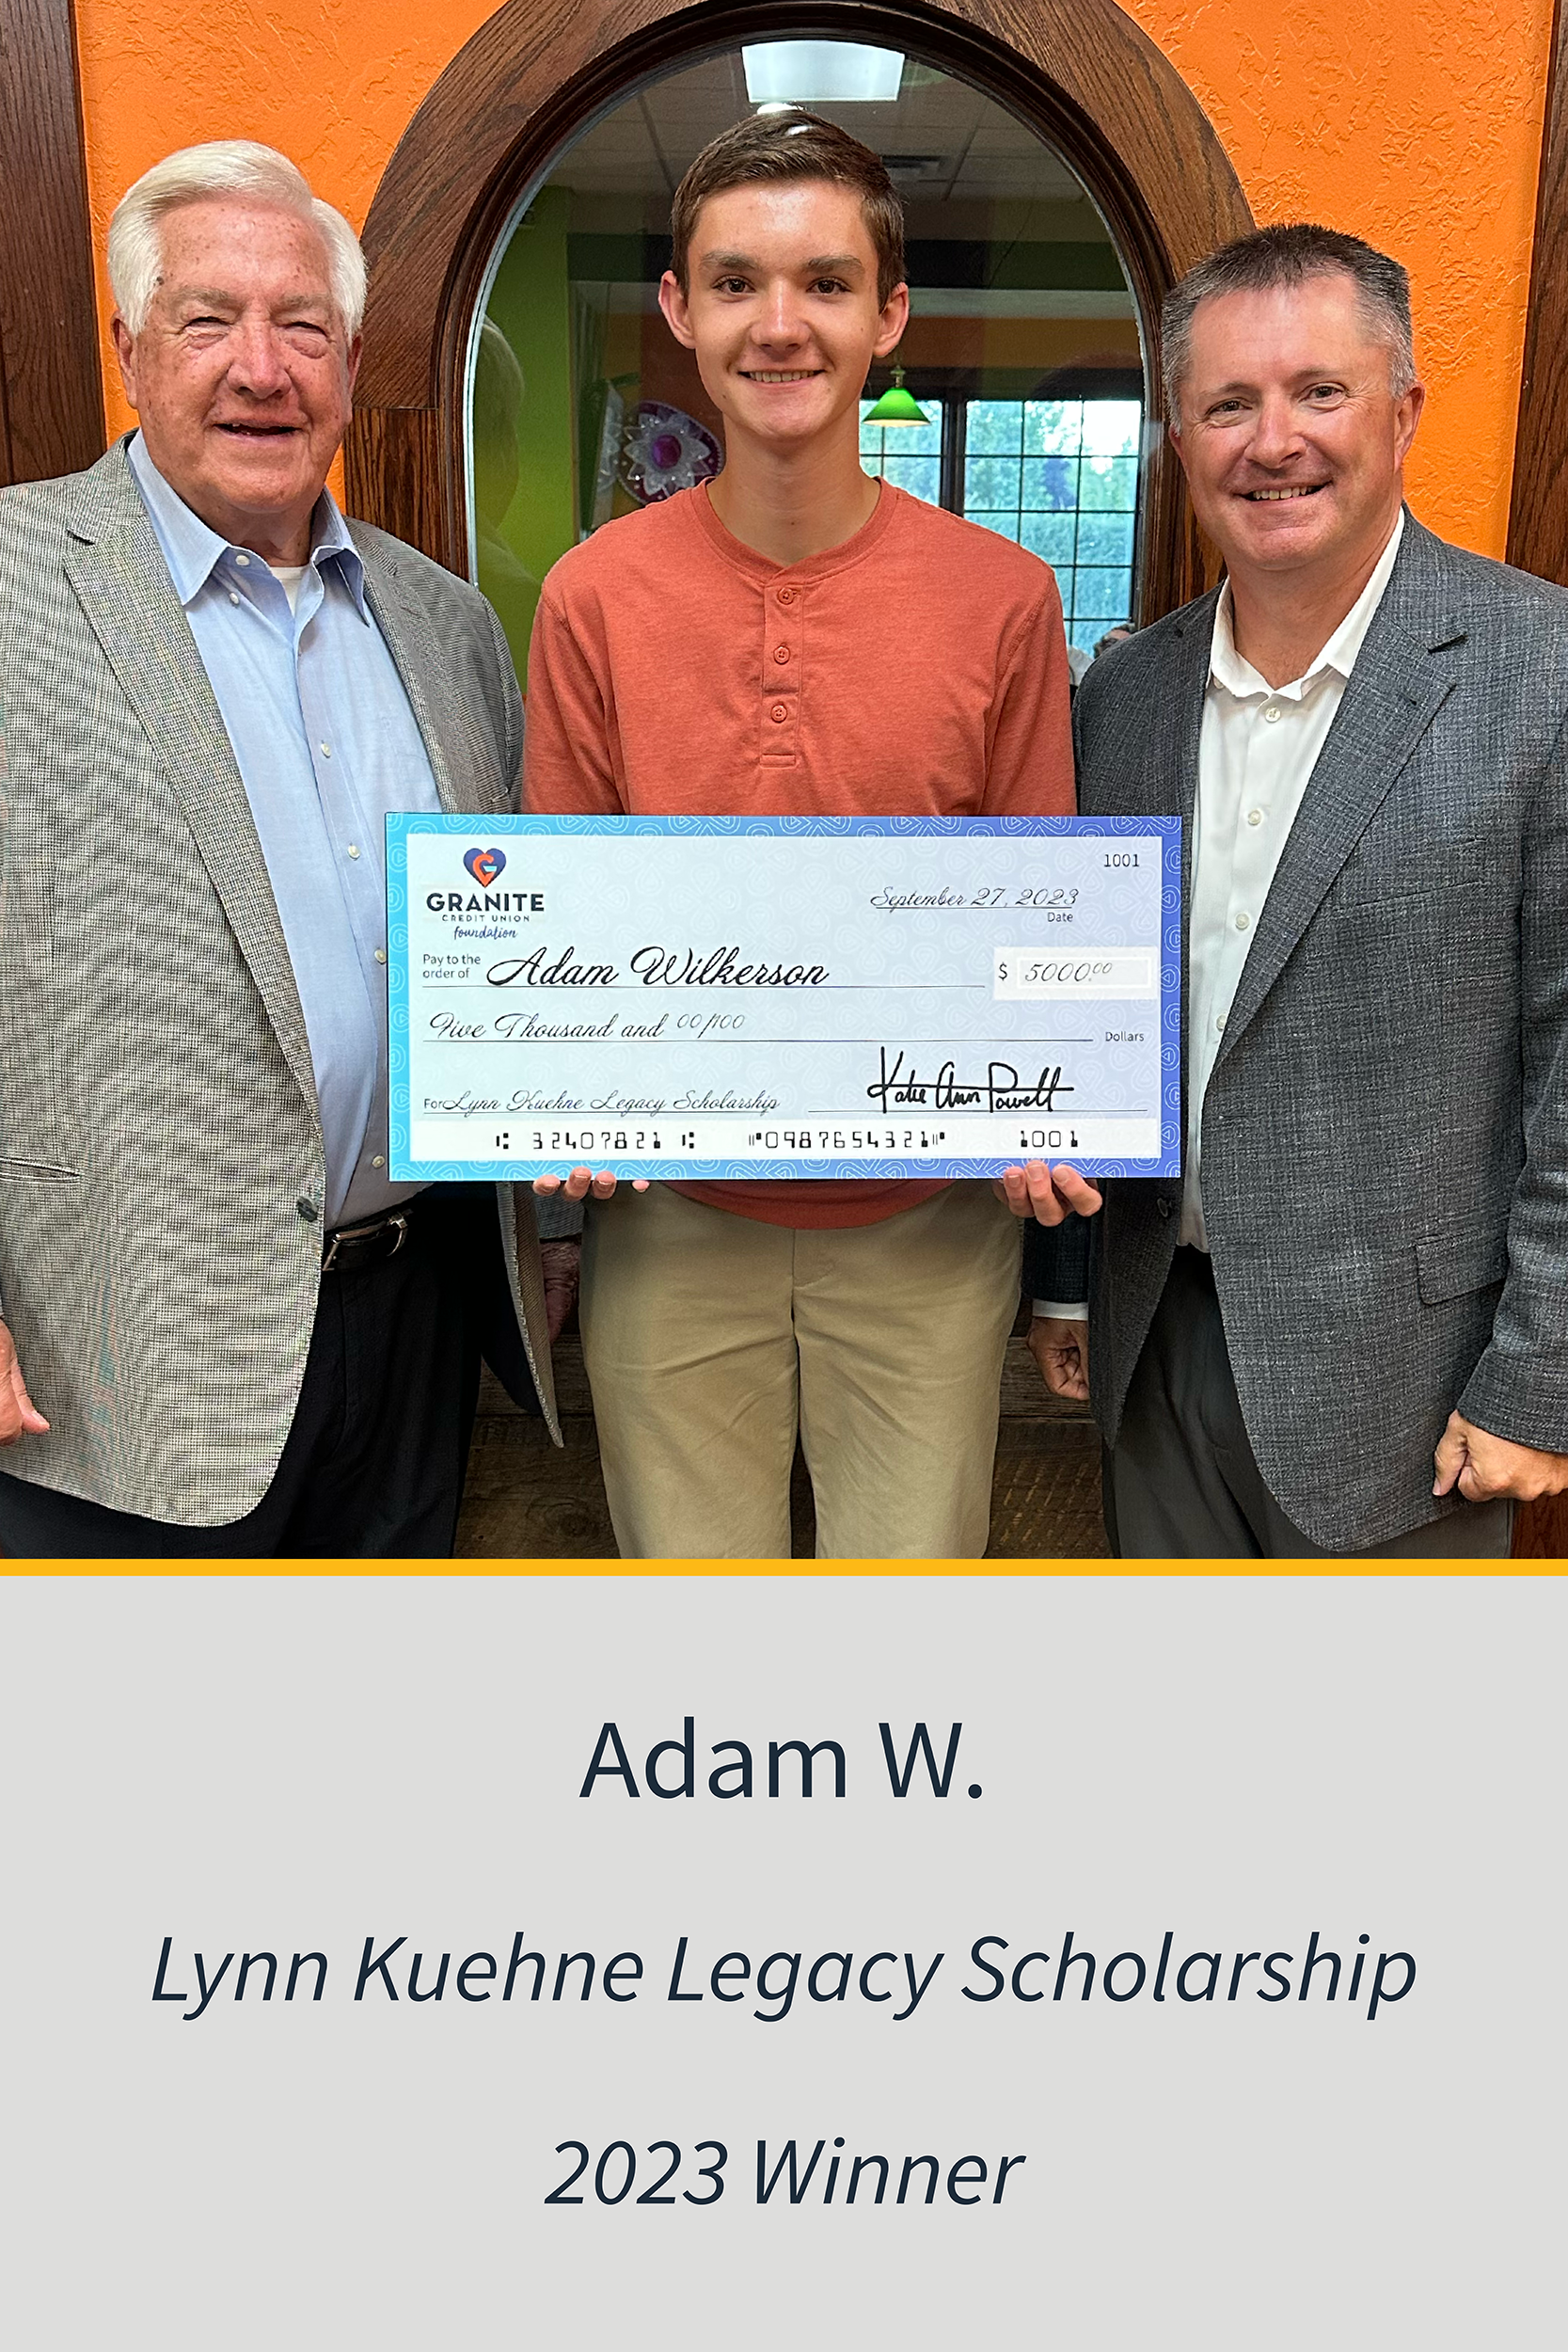 Lynn Kuehne Legacy Scholarship 2003 Winner Adam W.